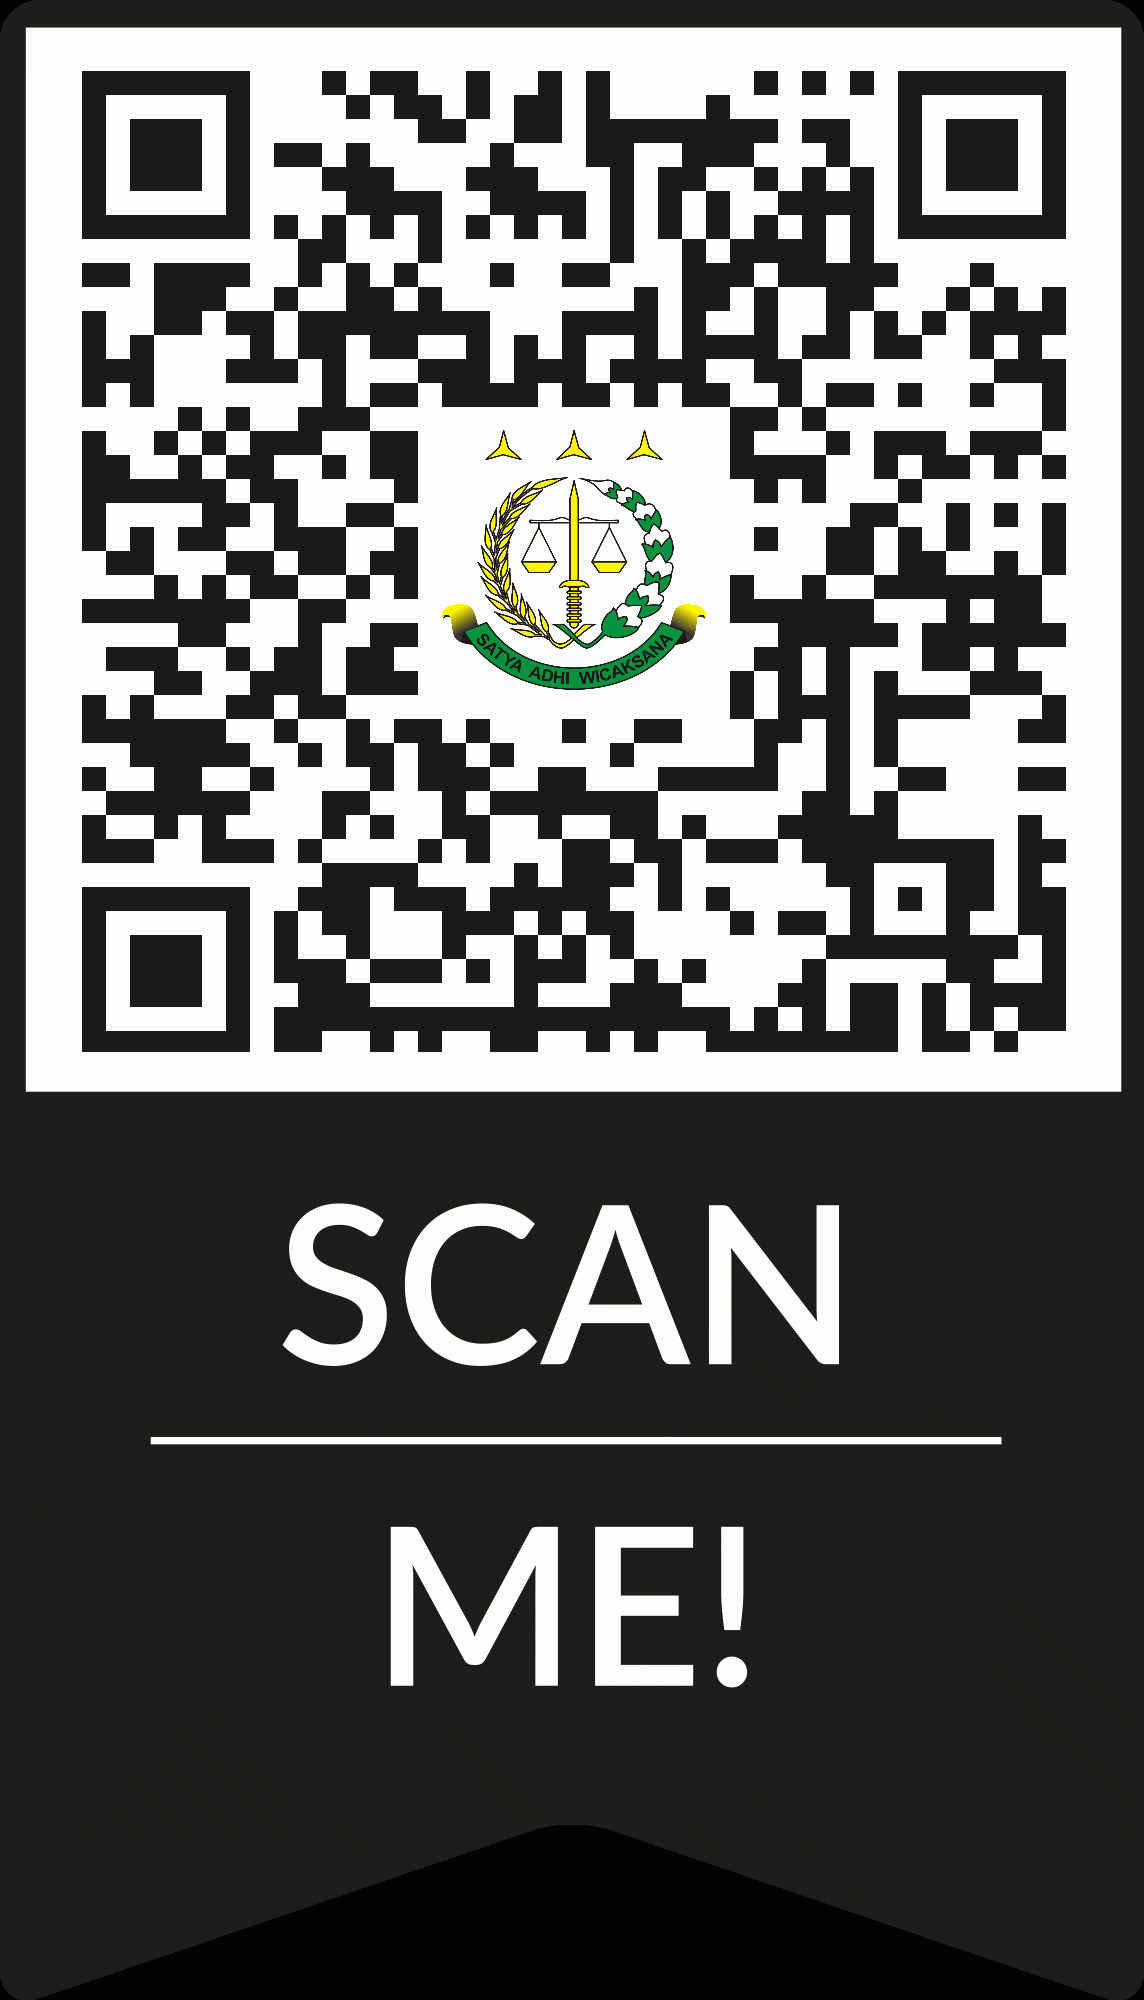 Scan Me!